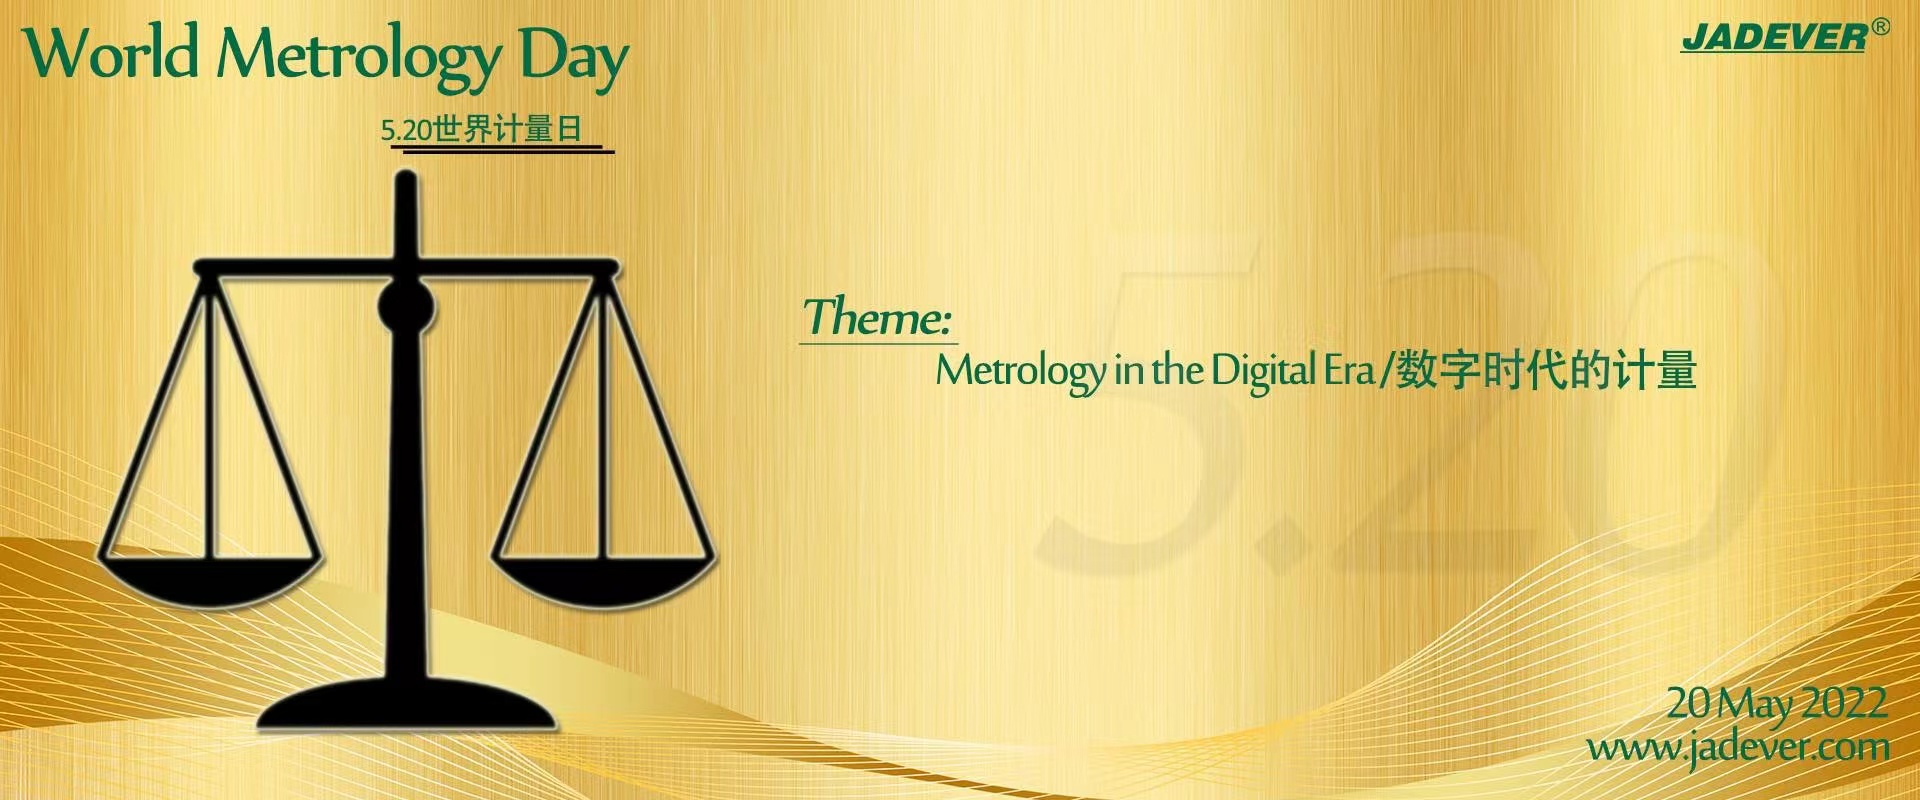 World Metrology Day: 20 May 2022